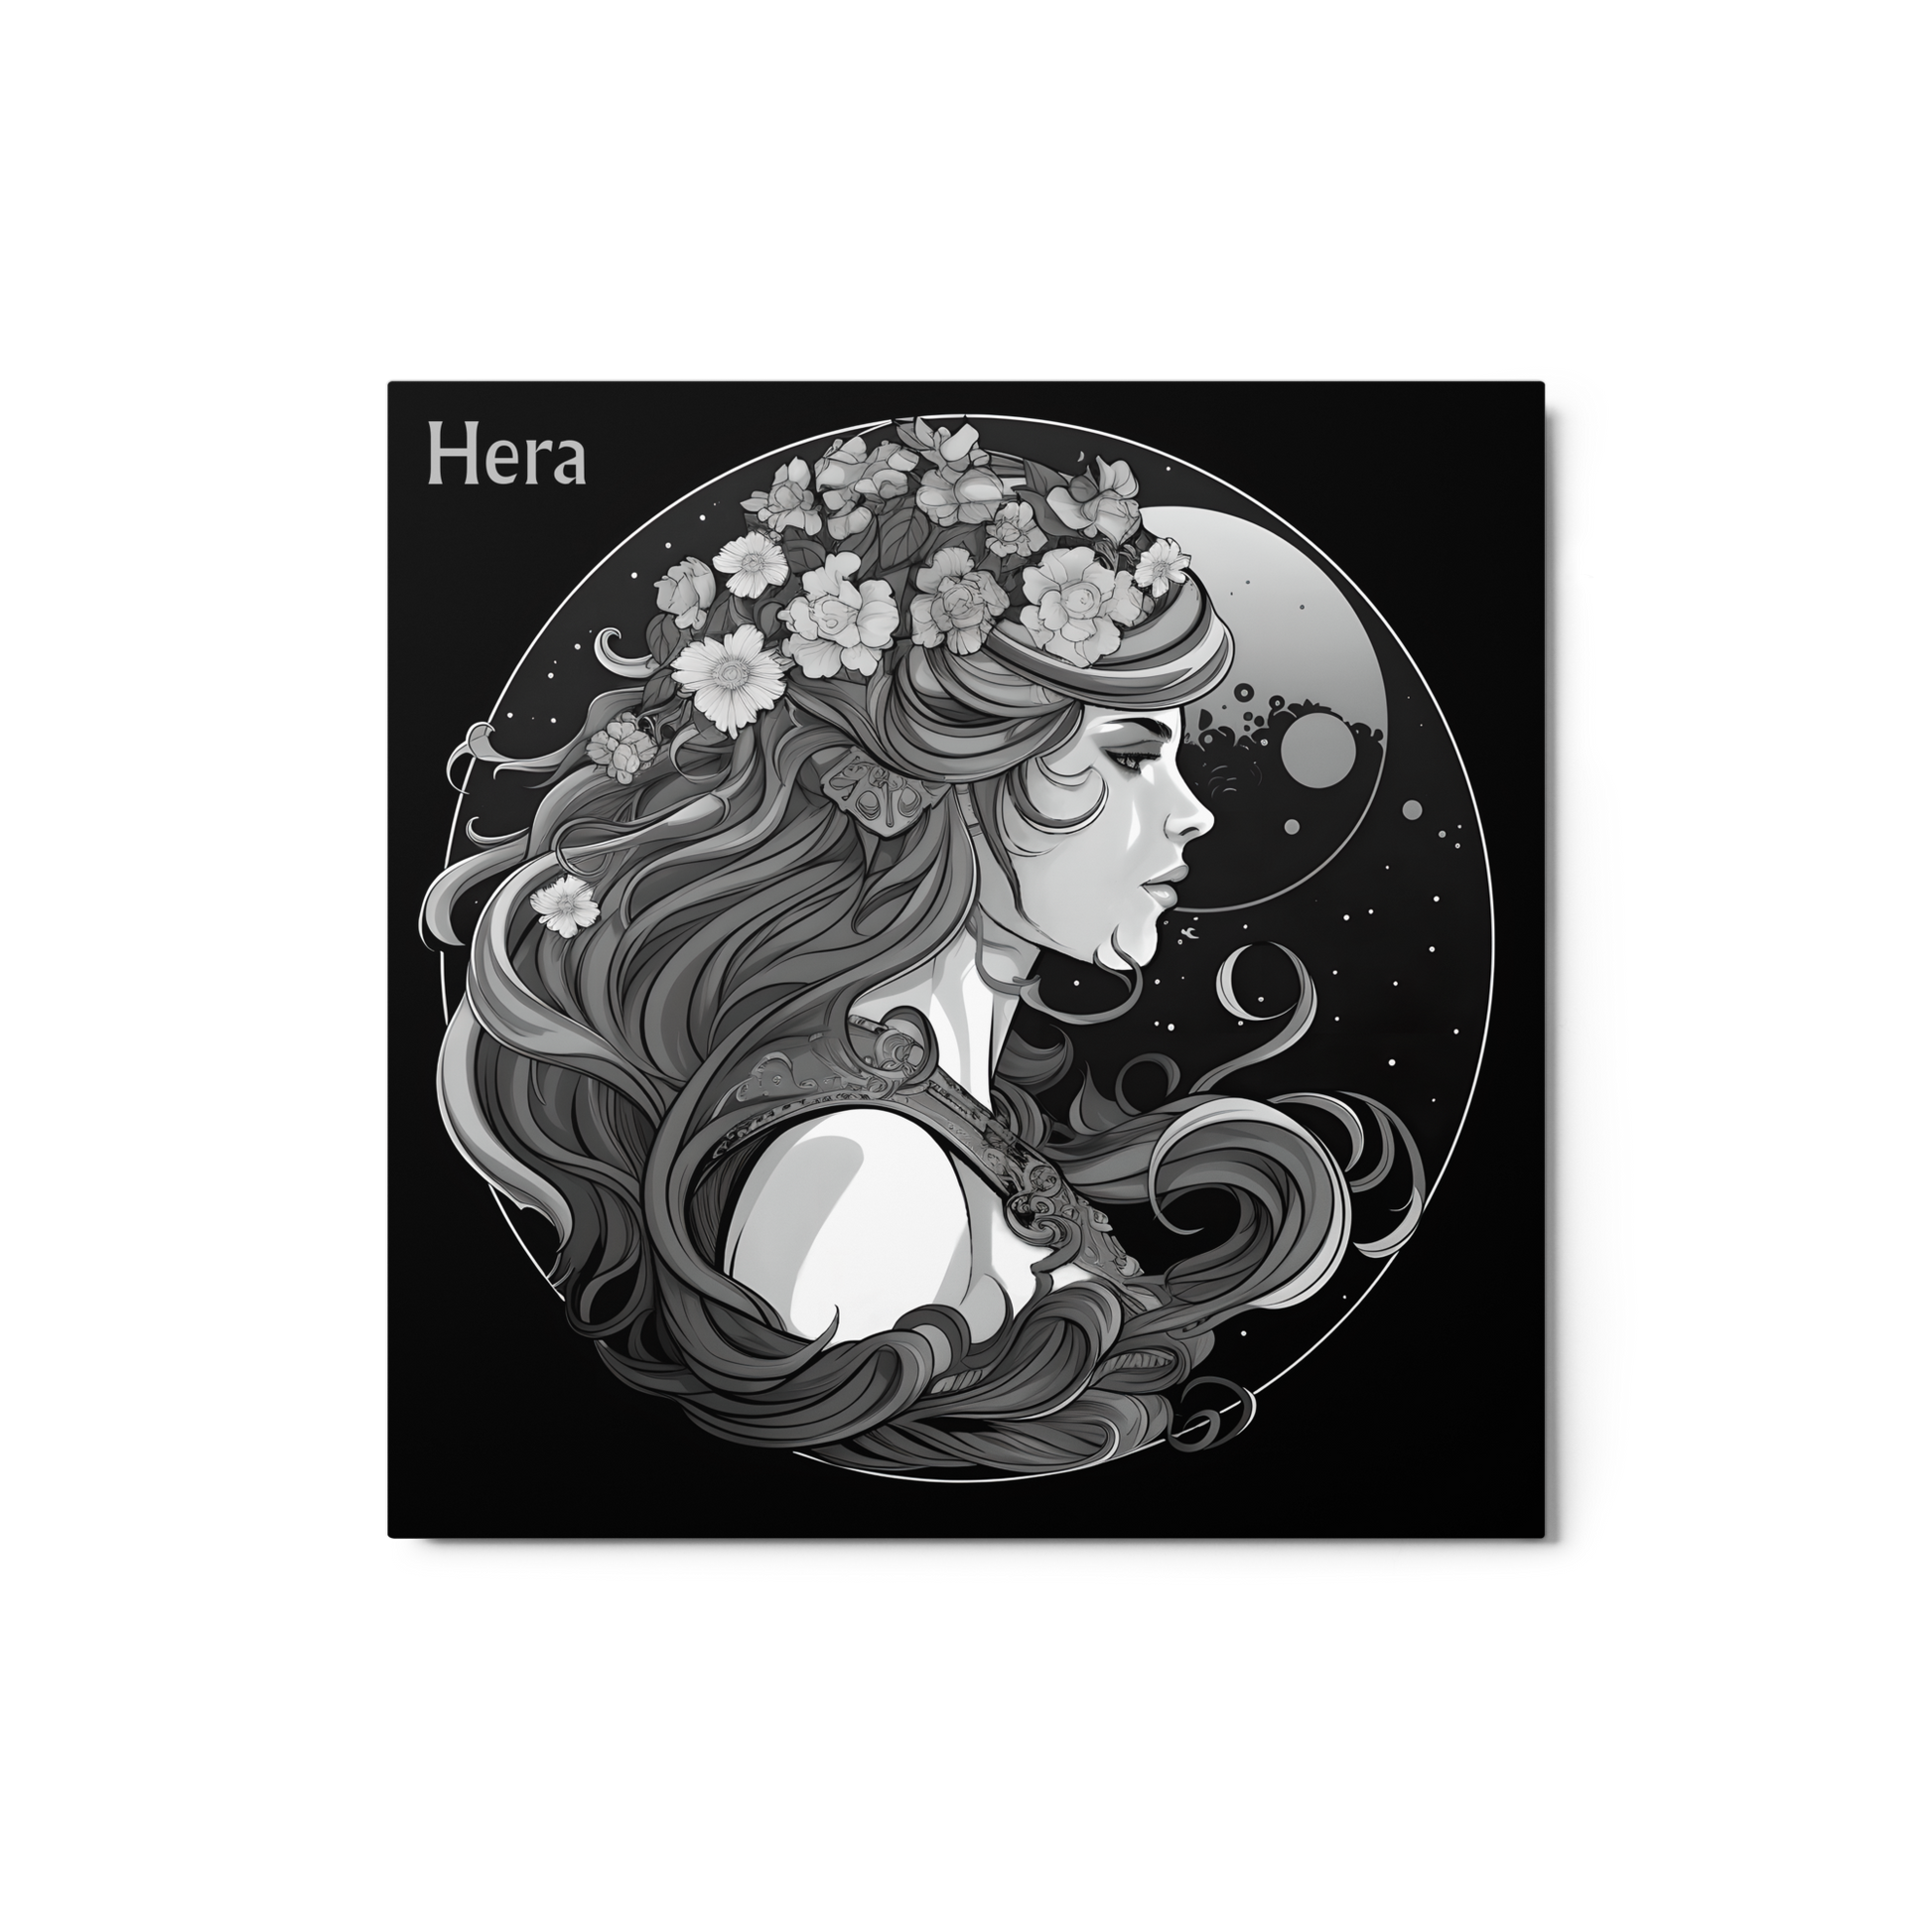 Hera's Devotion - Black and White Hanging Wall Art High Quality Metal Print DrawDadDraw